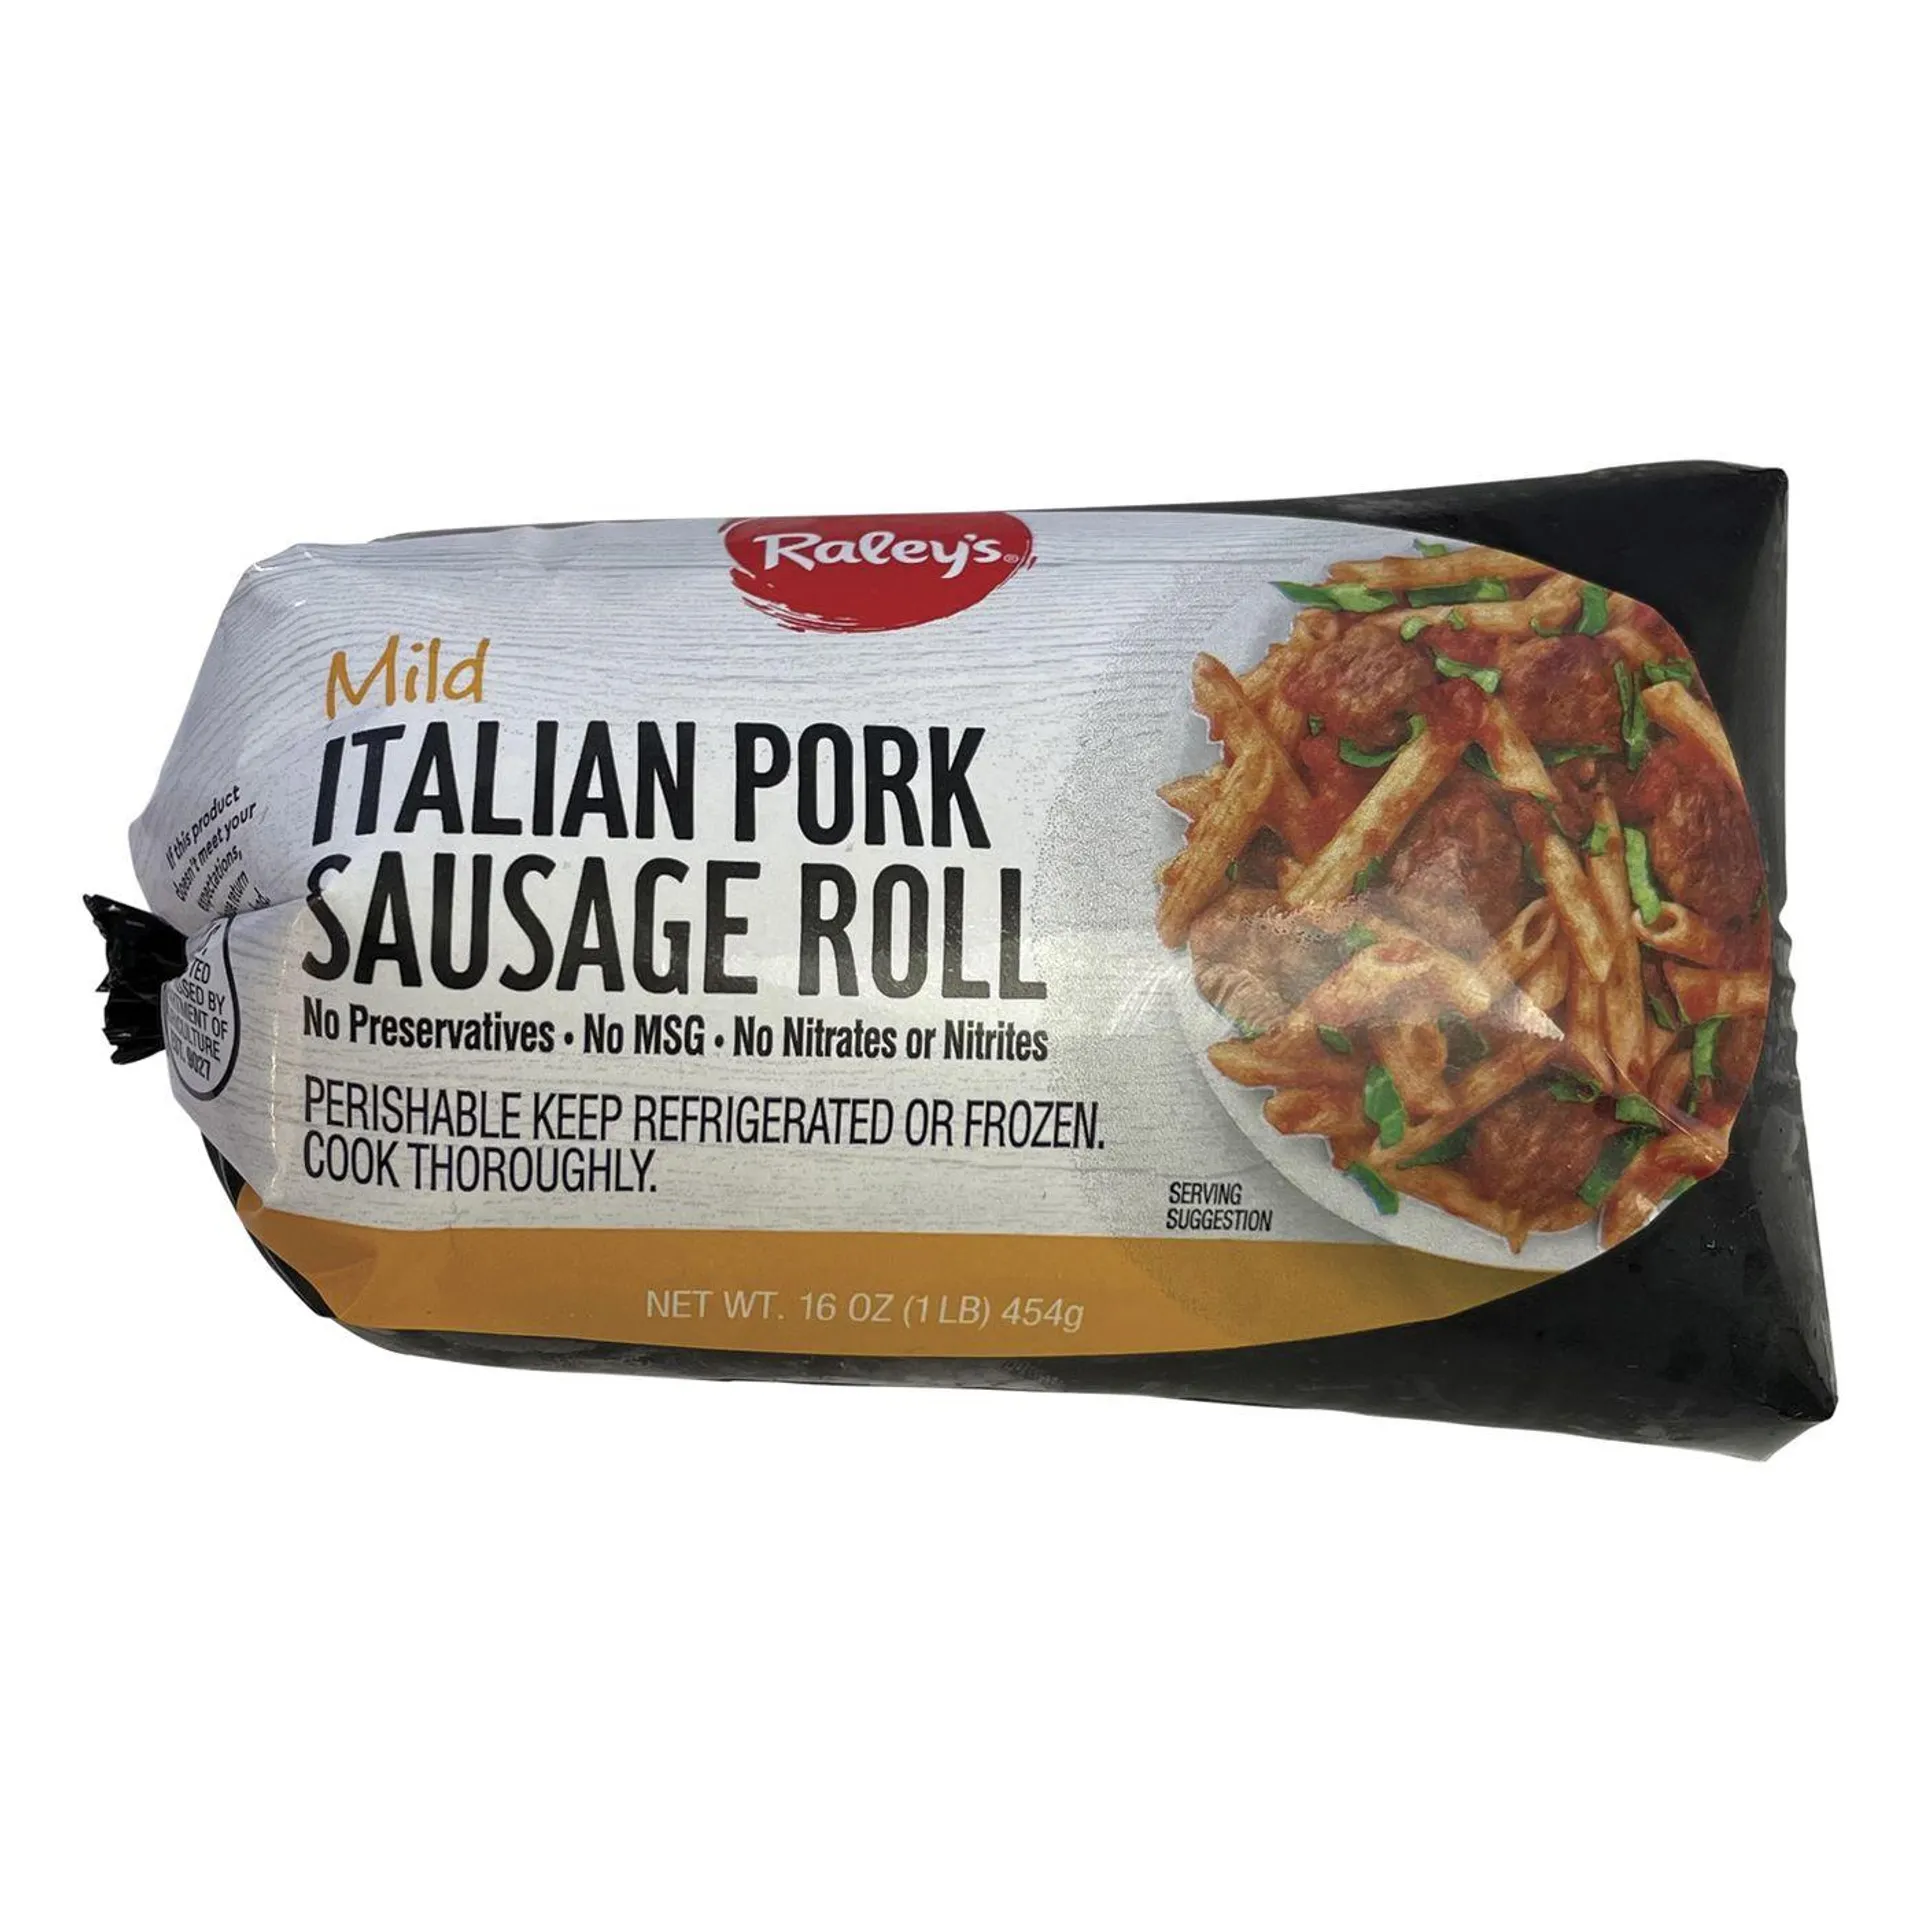 Raley's Fine Meats Mild Italian Pork Sausage Roll